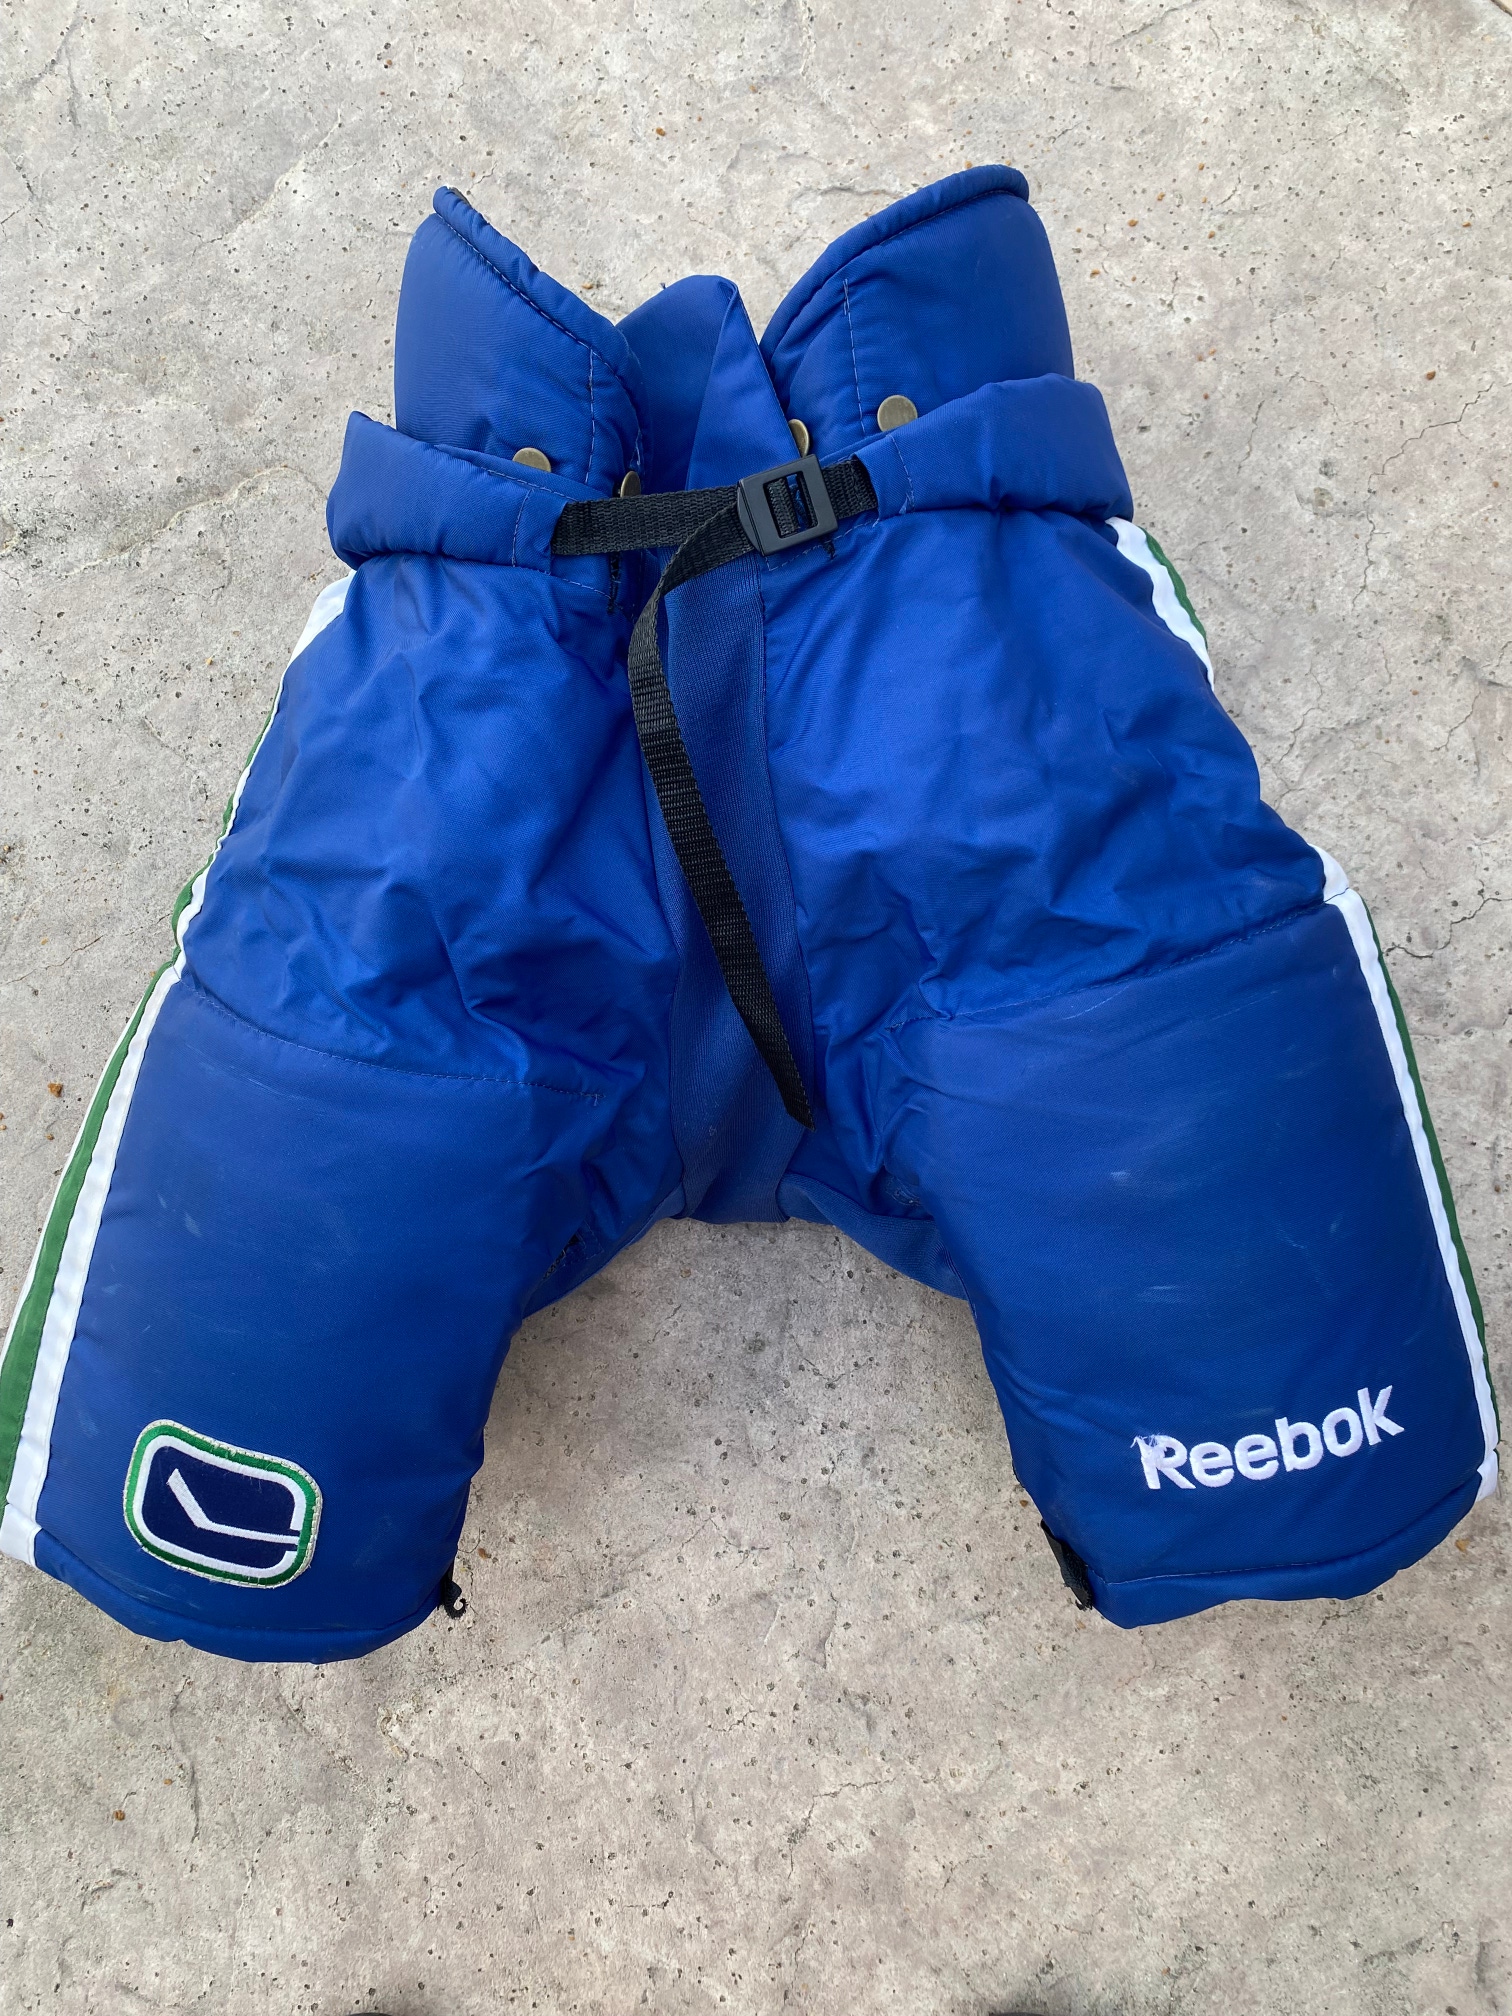 Reebok HP7000 Pro Stock Hockey Pants Vancouver Canucks Medium 3912